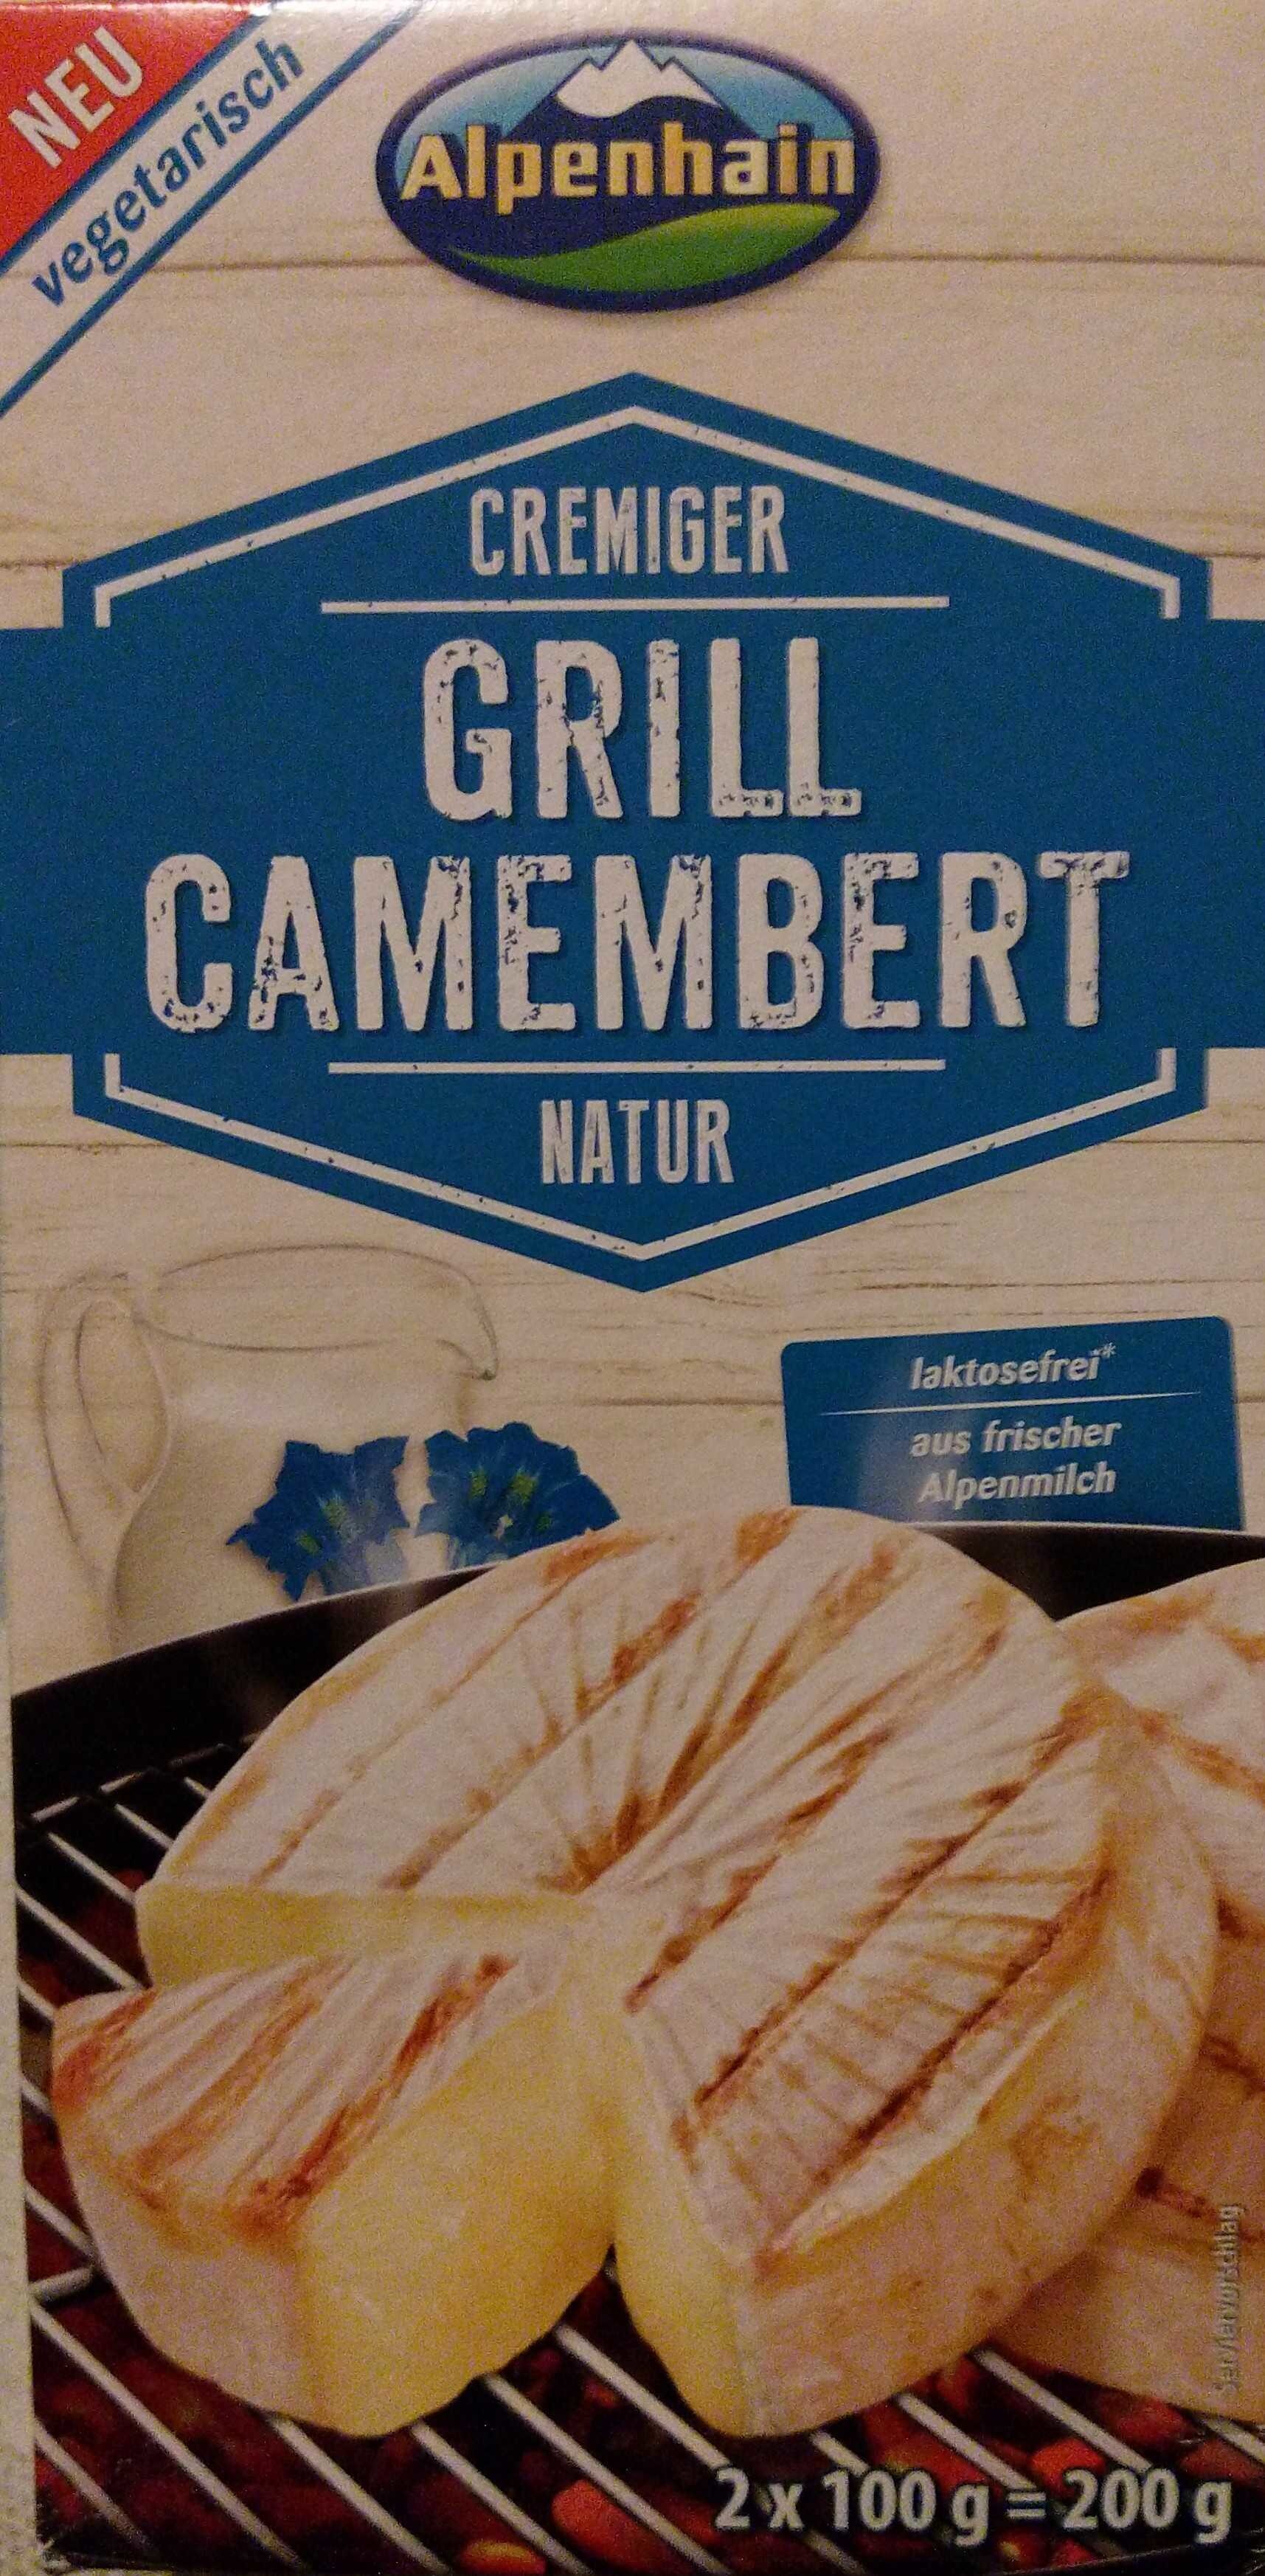 Grill Camembert Natur - Product - de